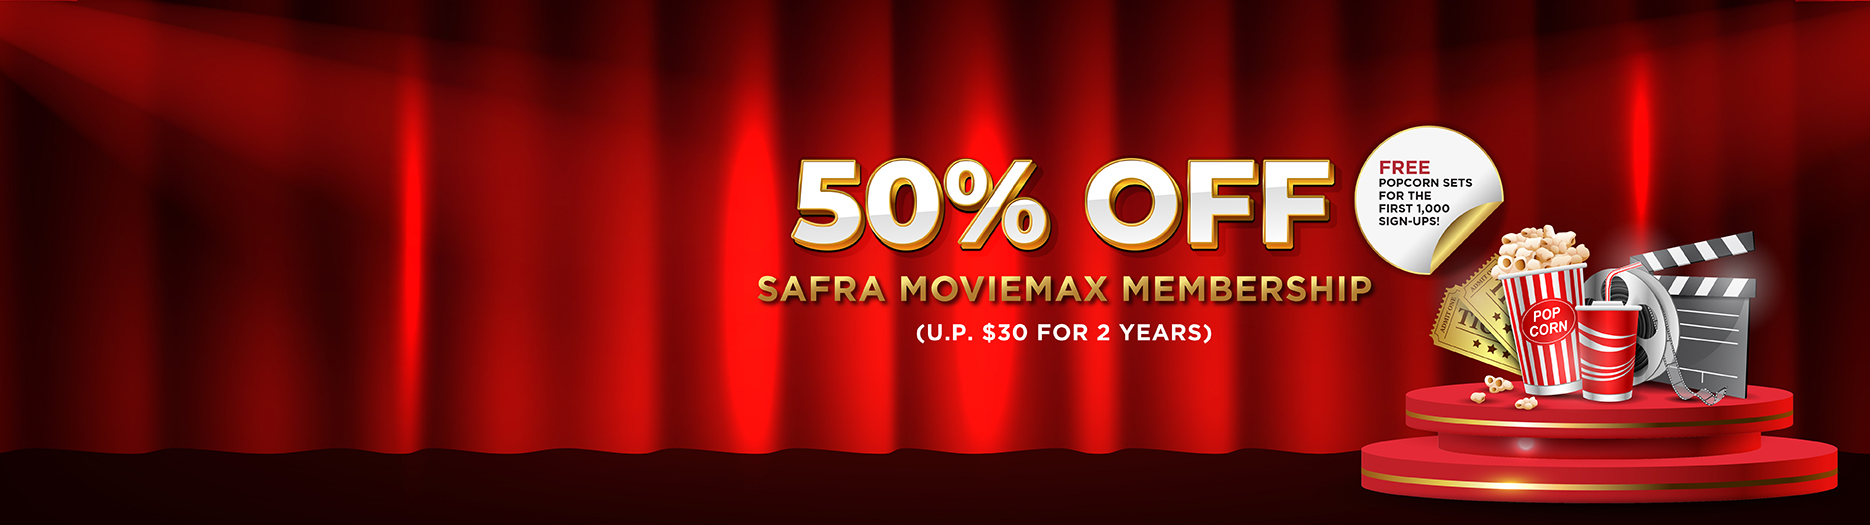 MovieMax Banner - 50% MovieMax WB_1870x525-01 webpage banner